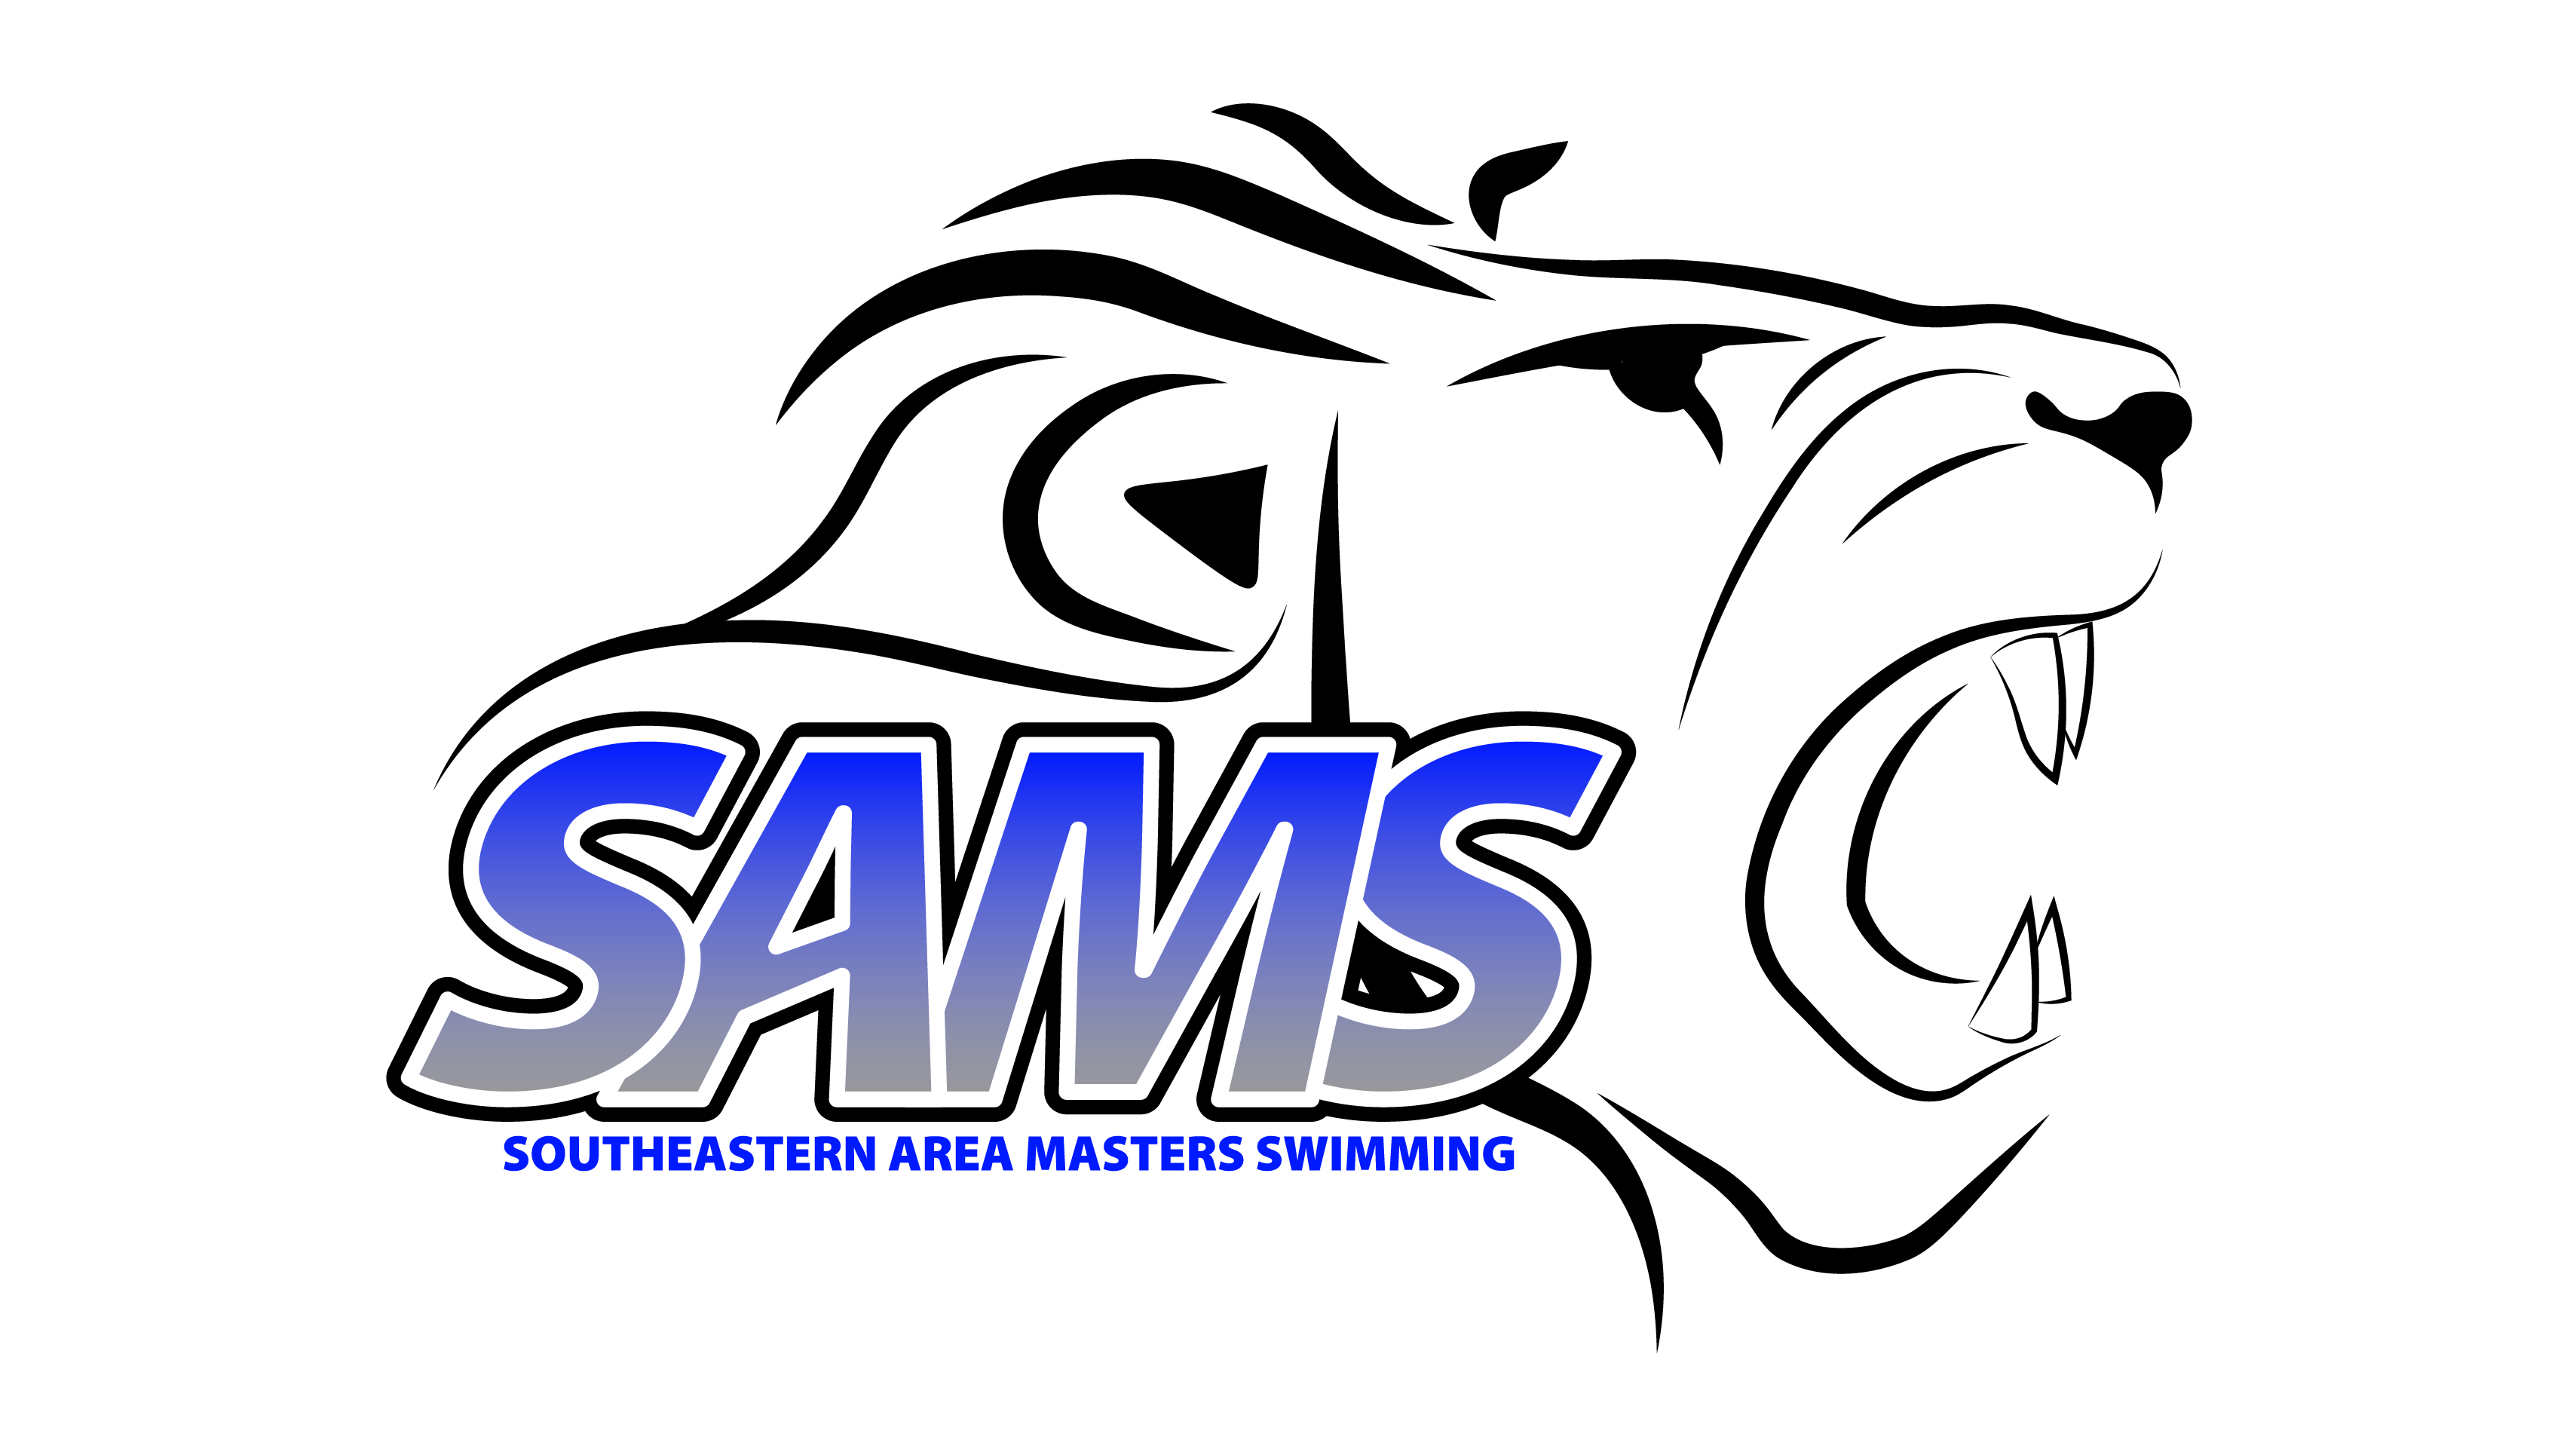 Southeastern Area Masters Swimming